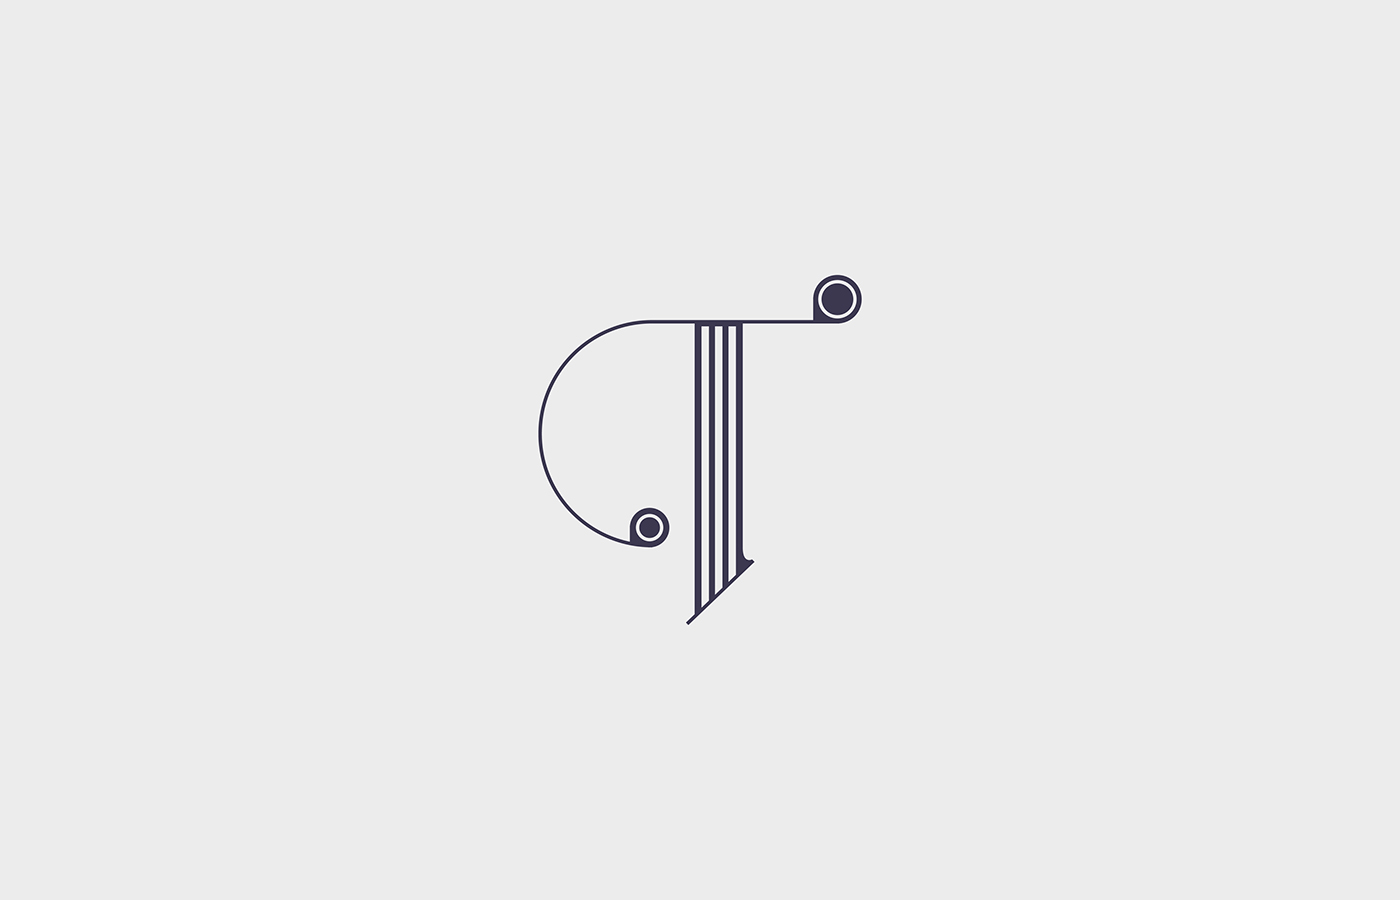 36daysoftype type letterring numbers logo design brand mark Kuwait KSA amman typographic typelogo letters